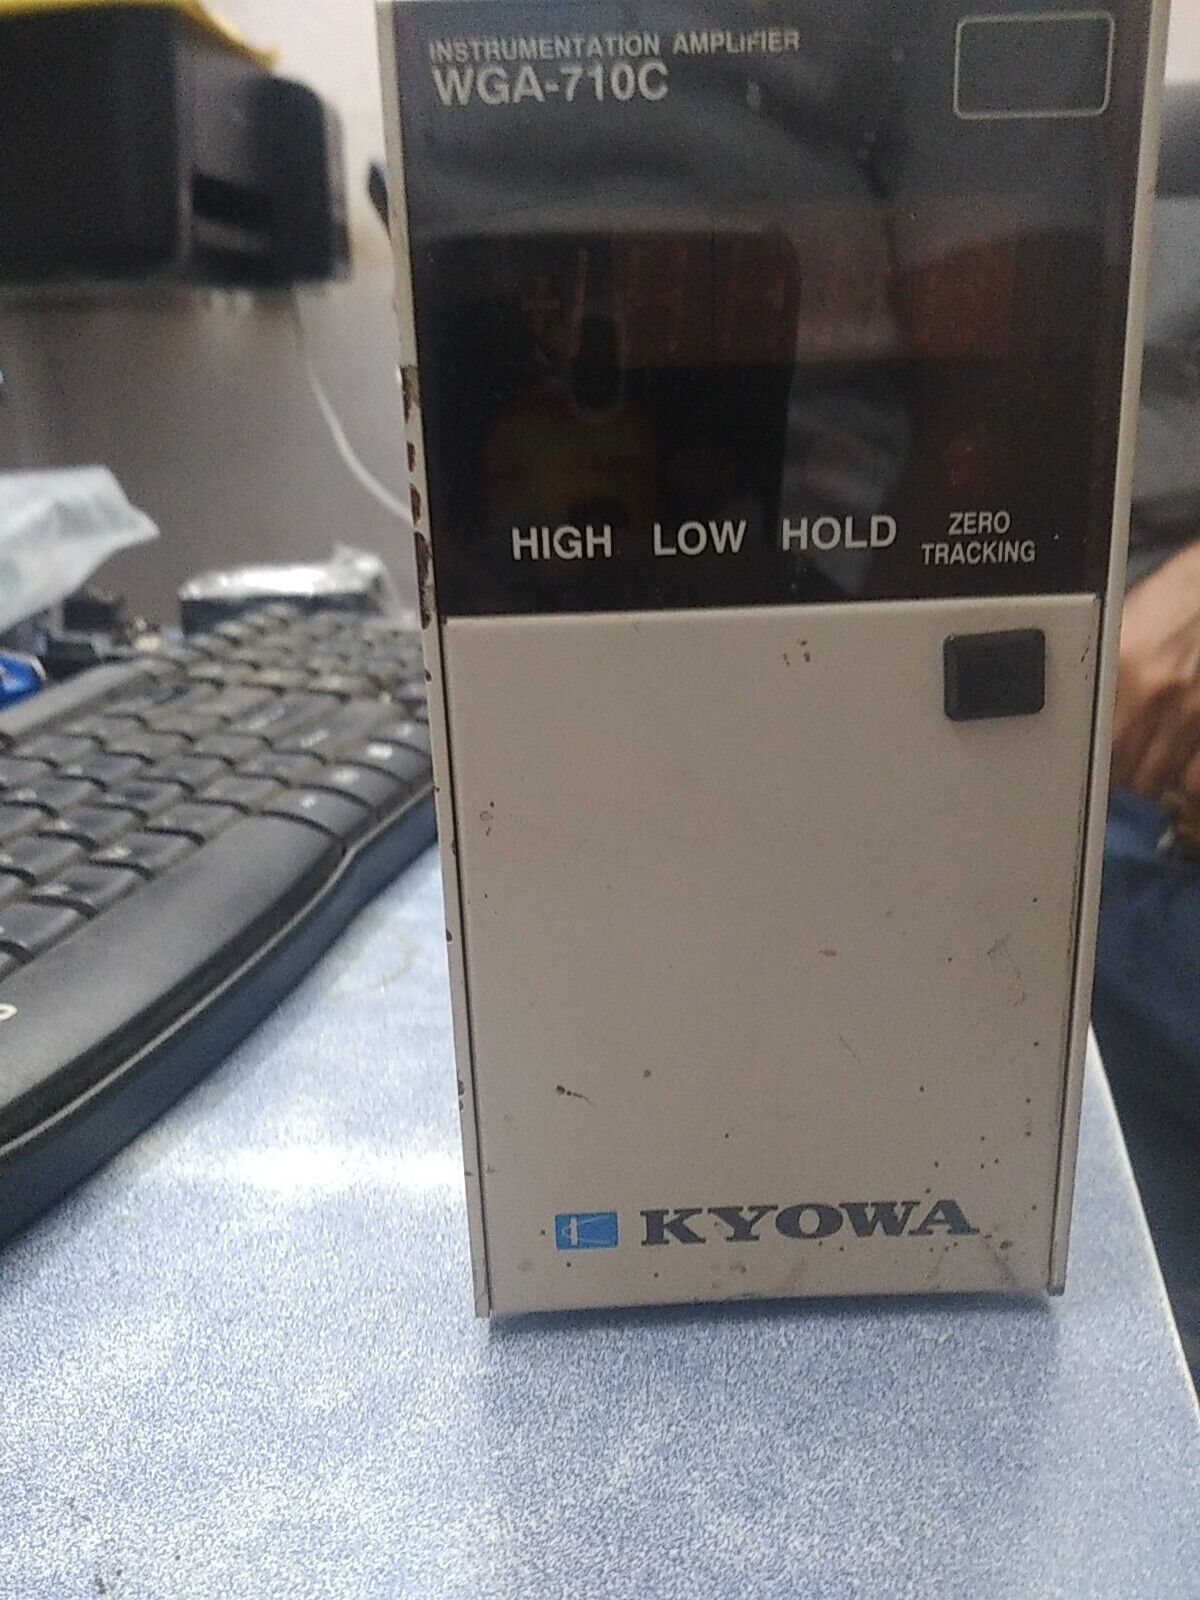 KYOWA INSTRUMENTATION AMPLIFIER WGA-710C